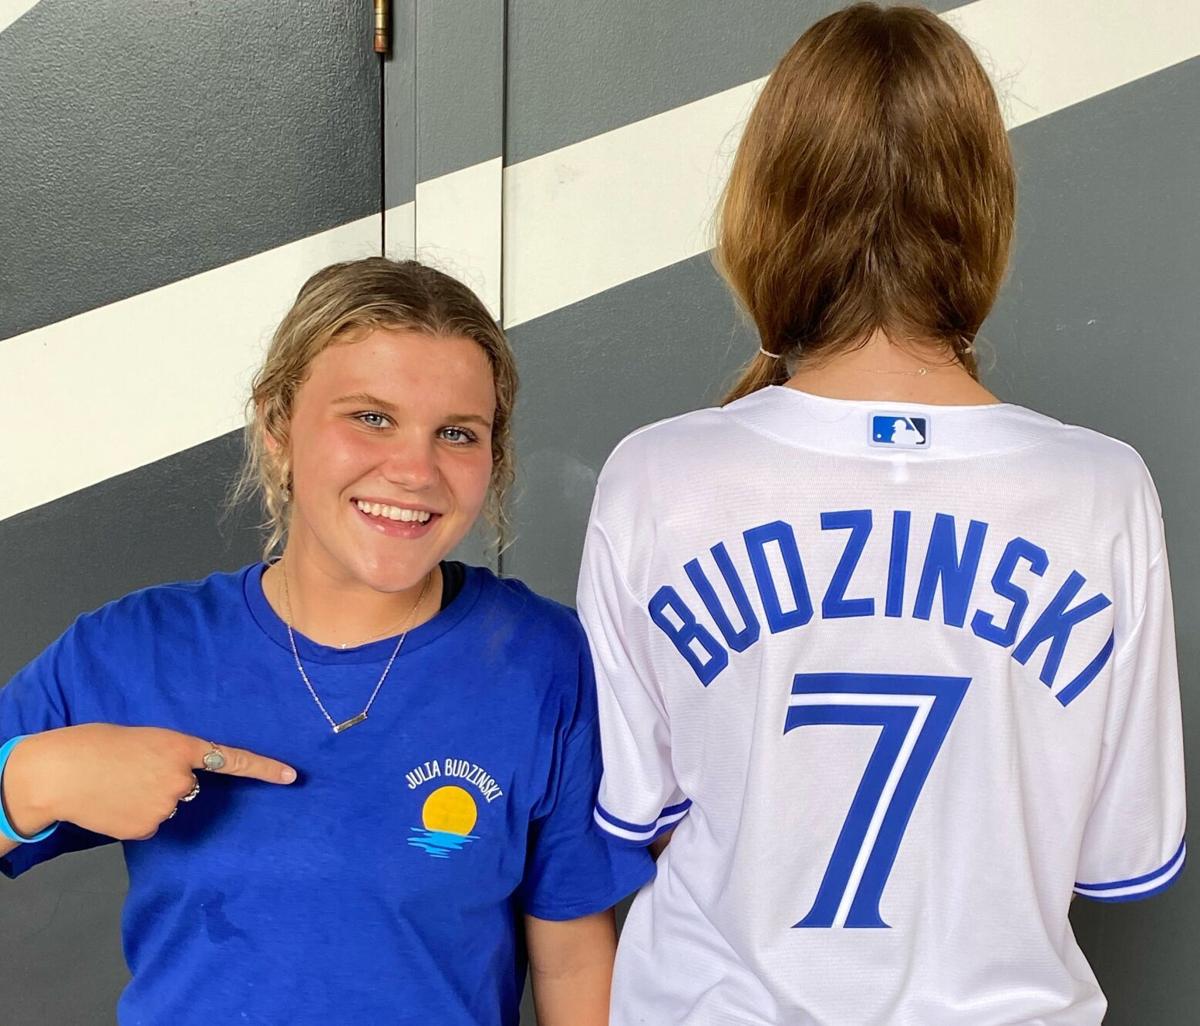 Julia Budzinski, daughter of Toronto Blue Jays coach Mark